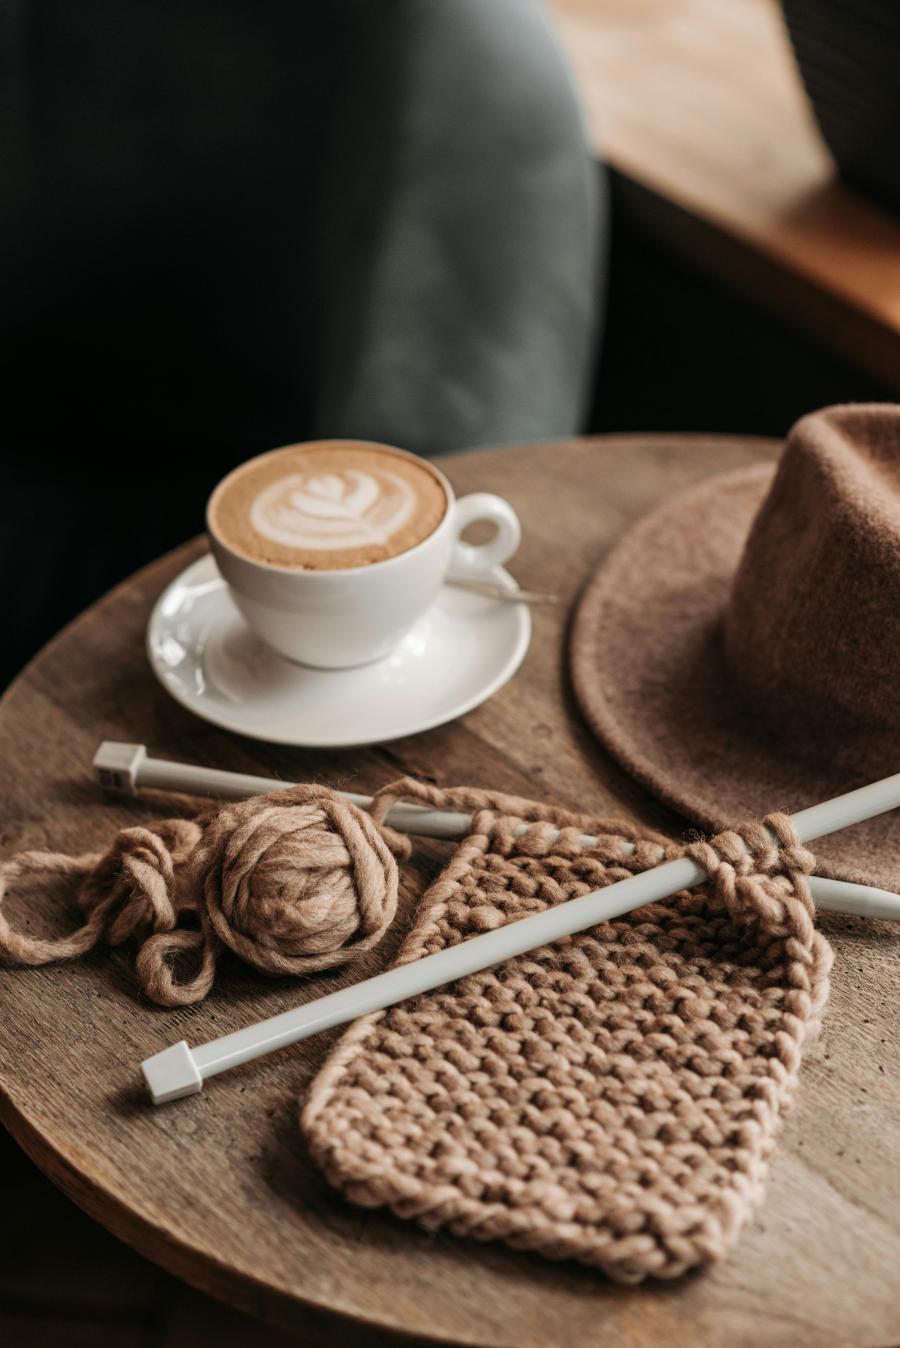 Strikketøj og kaffe. Foto credit: Pavel Danilyuk